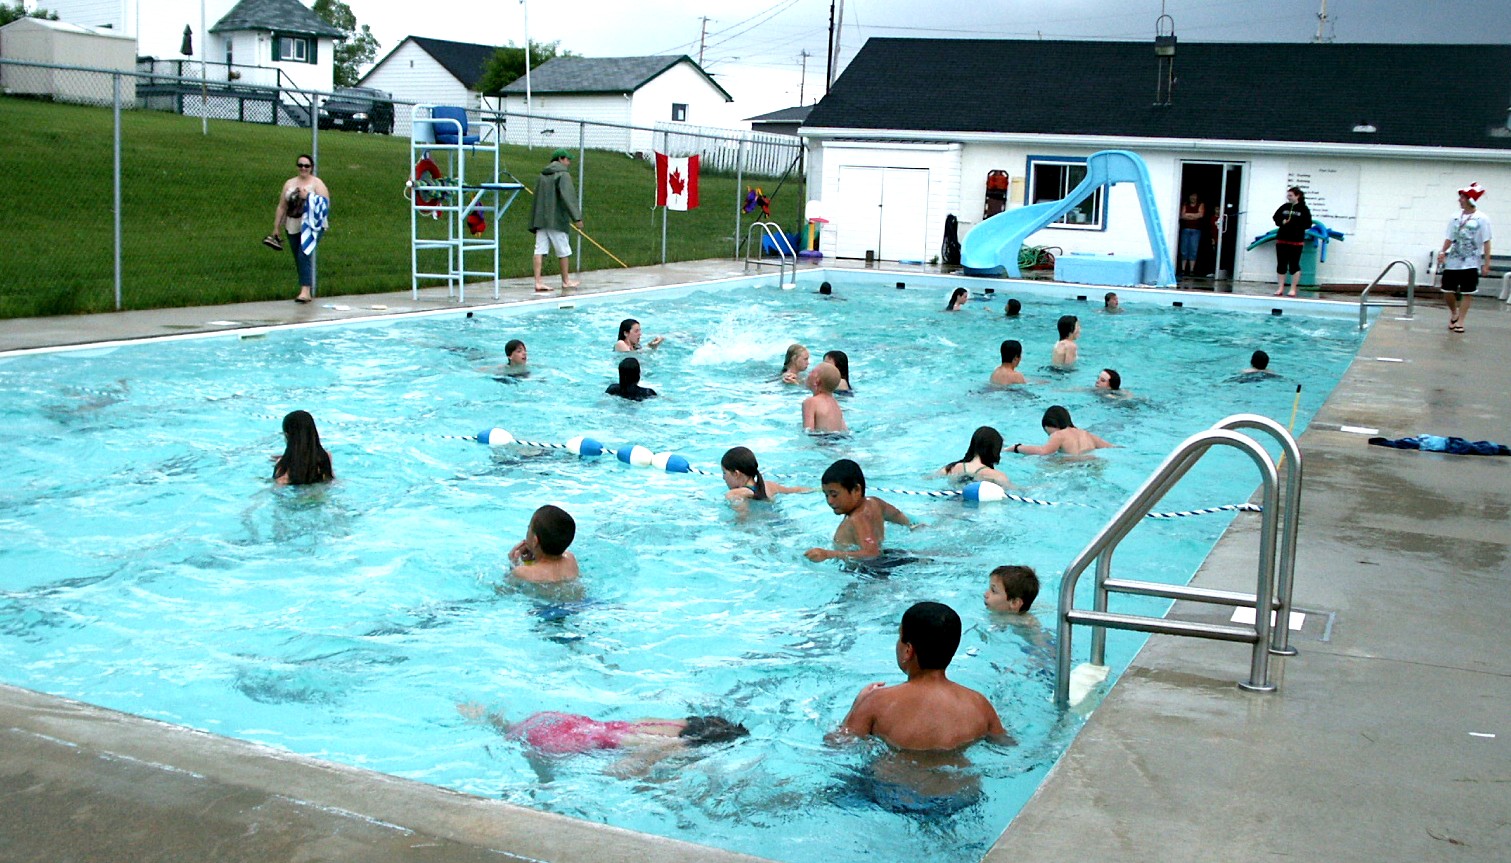 People enjoying the outdoor pool in Smooth Rock Falls. 